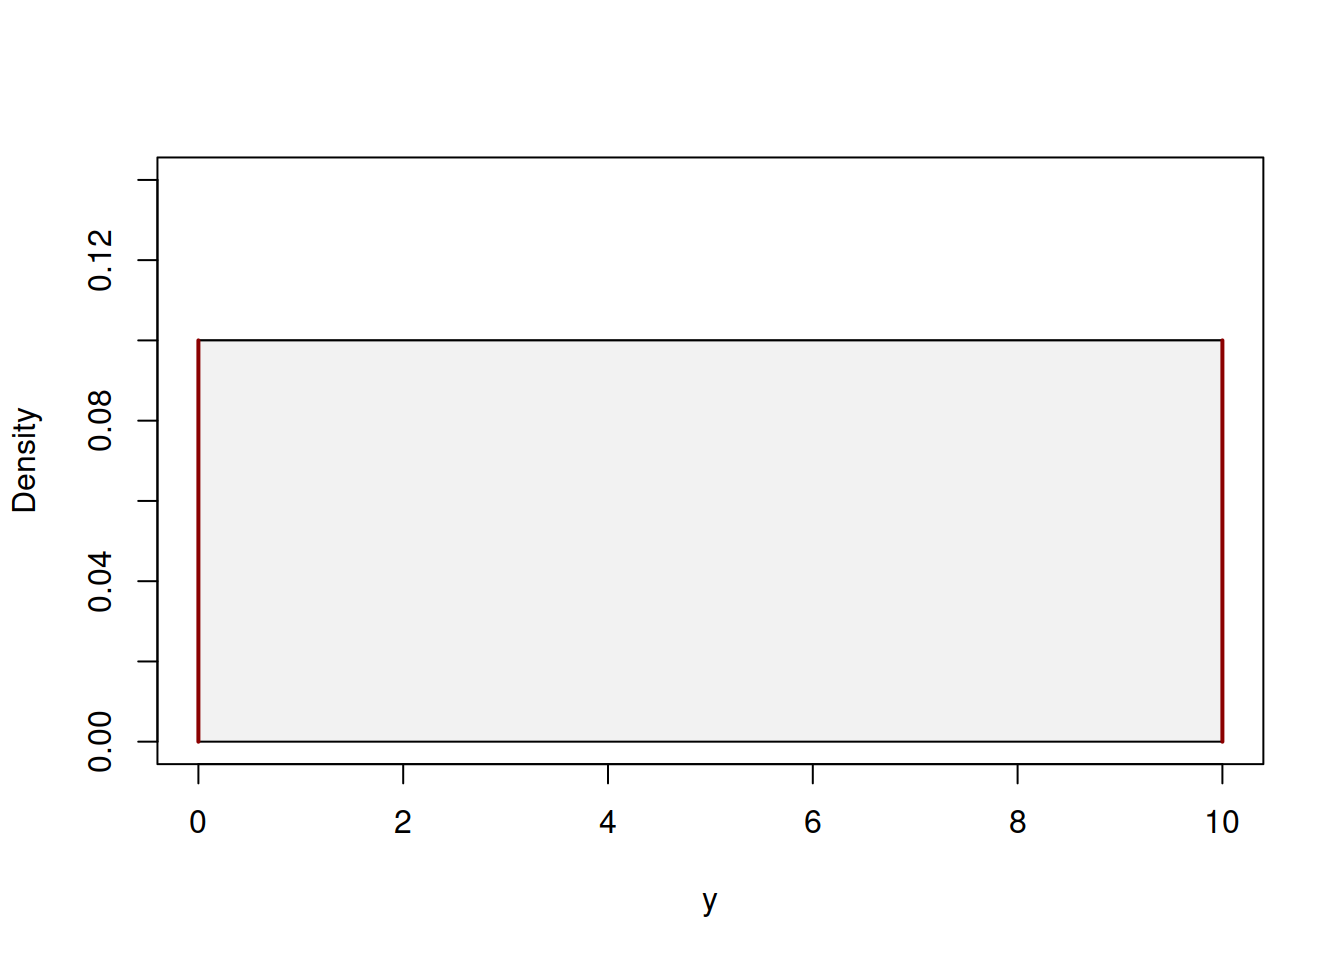 Probability Density Function of Continuous Uniform distribution.